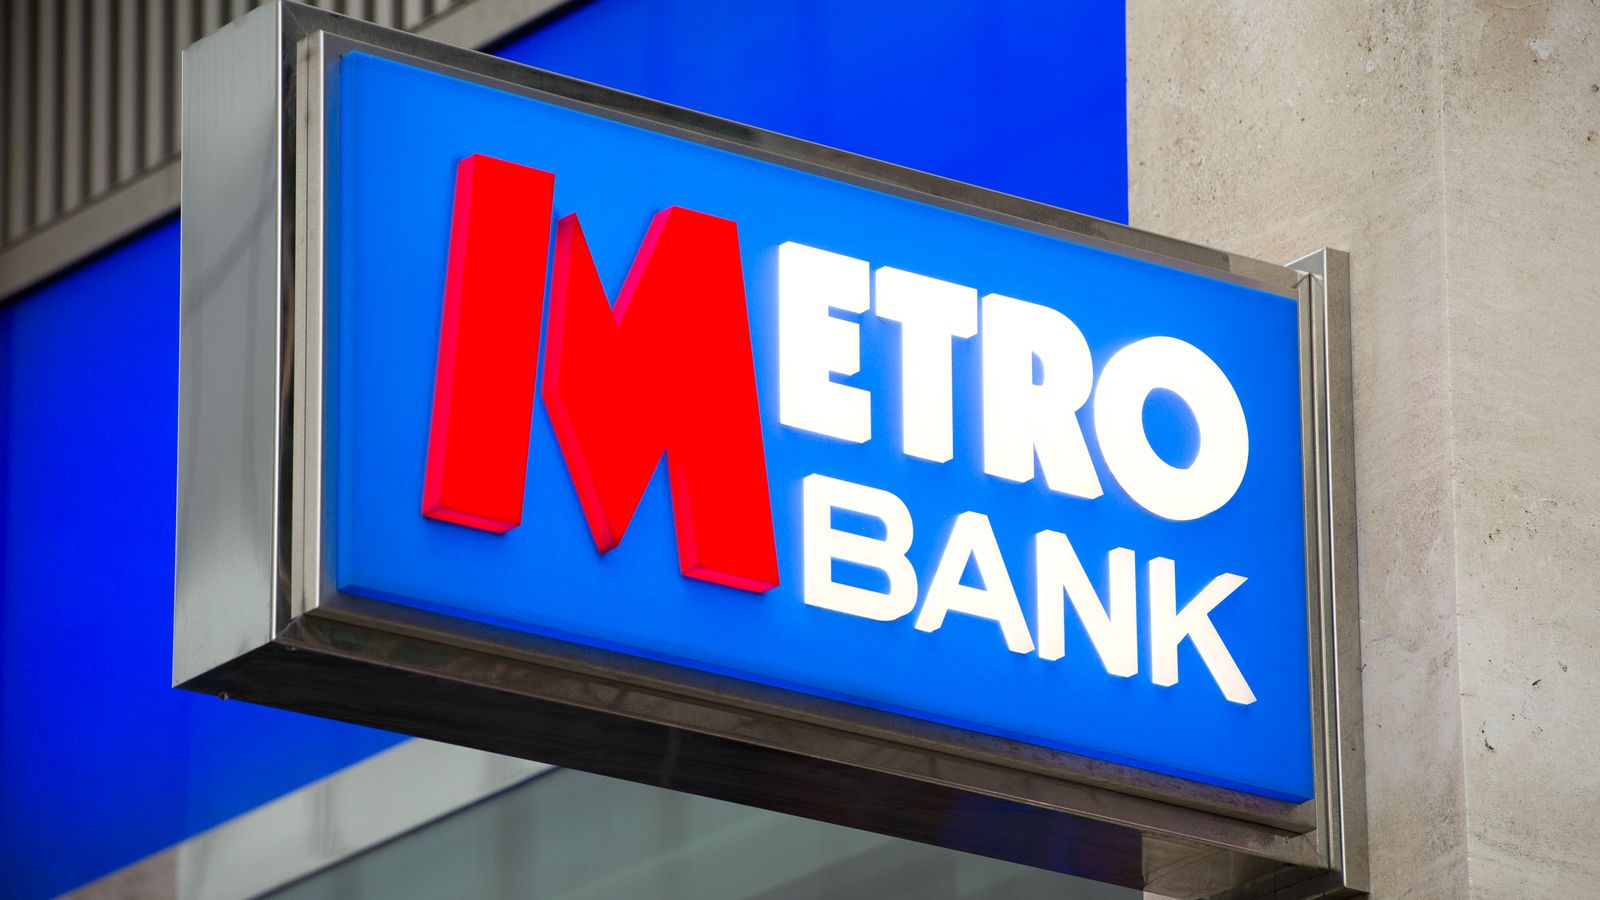 Metro Bank seeks bids within weeks for £3bn mortgage book